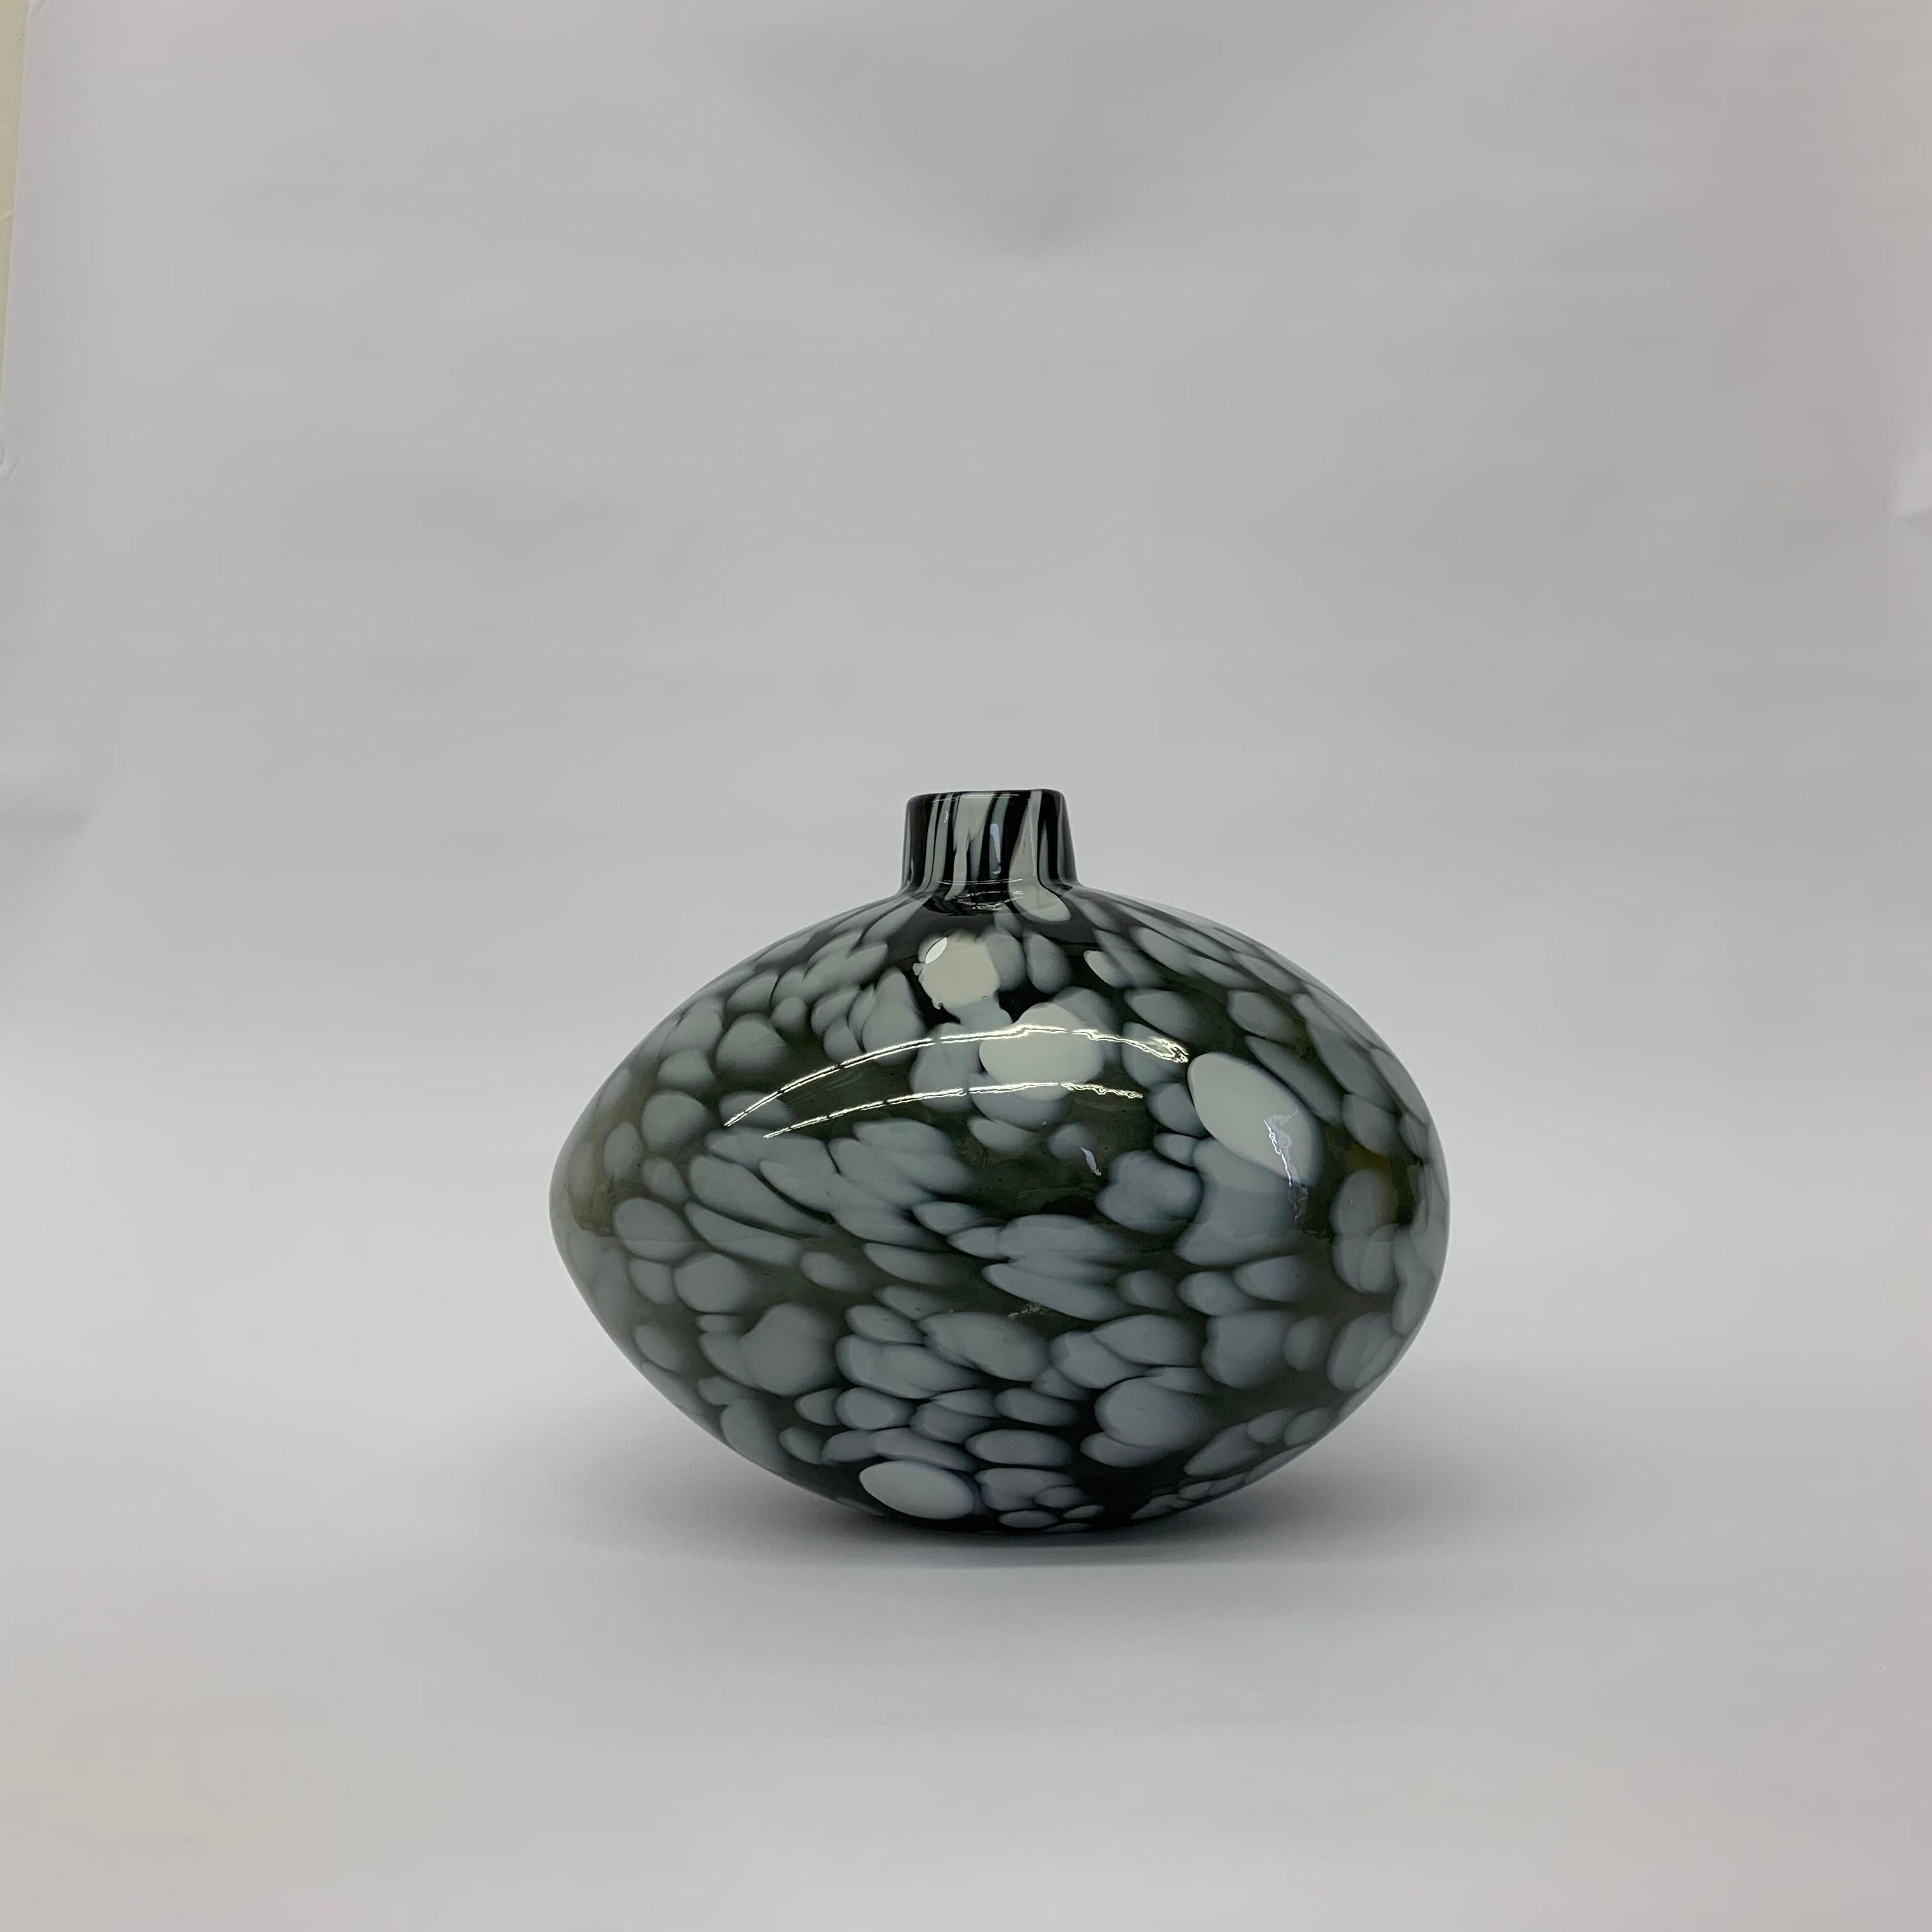 Art Glass Nest vase by Ann Wahlstrom for Kosta boda